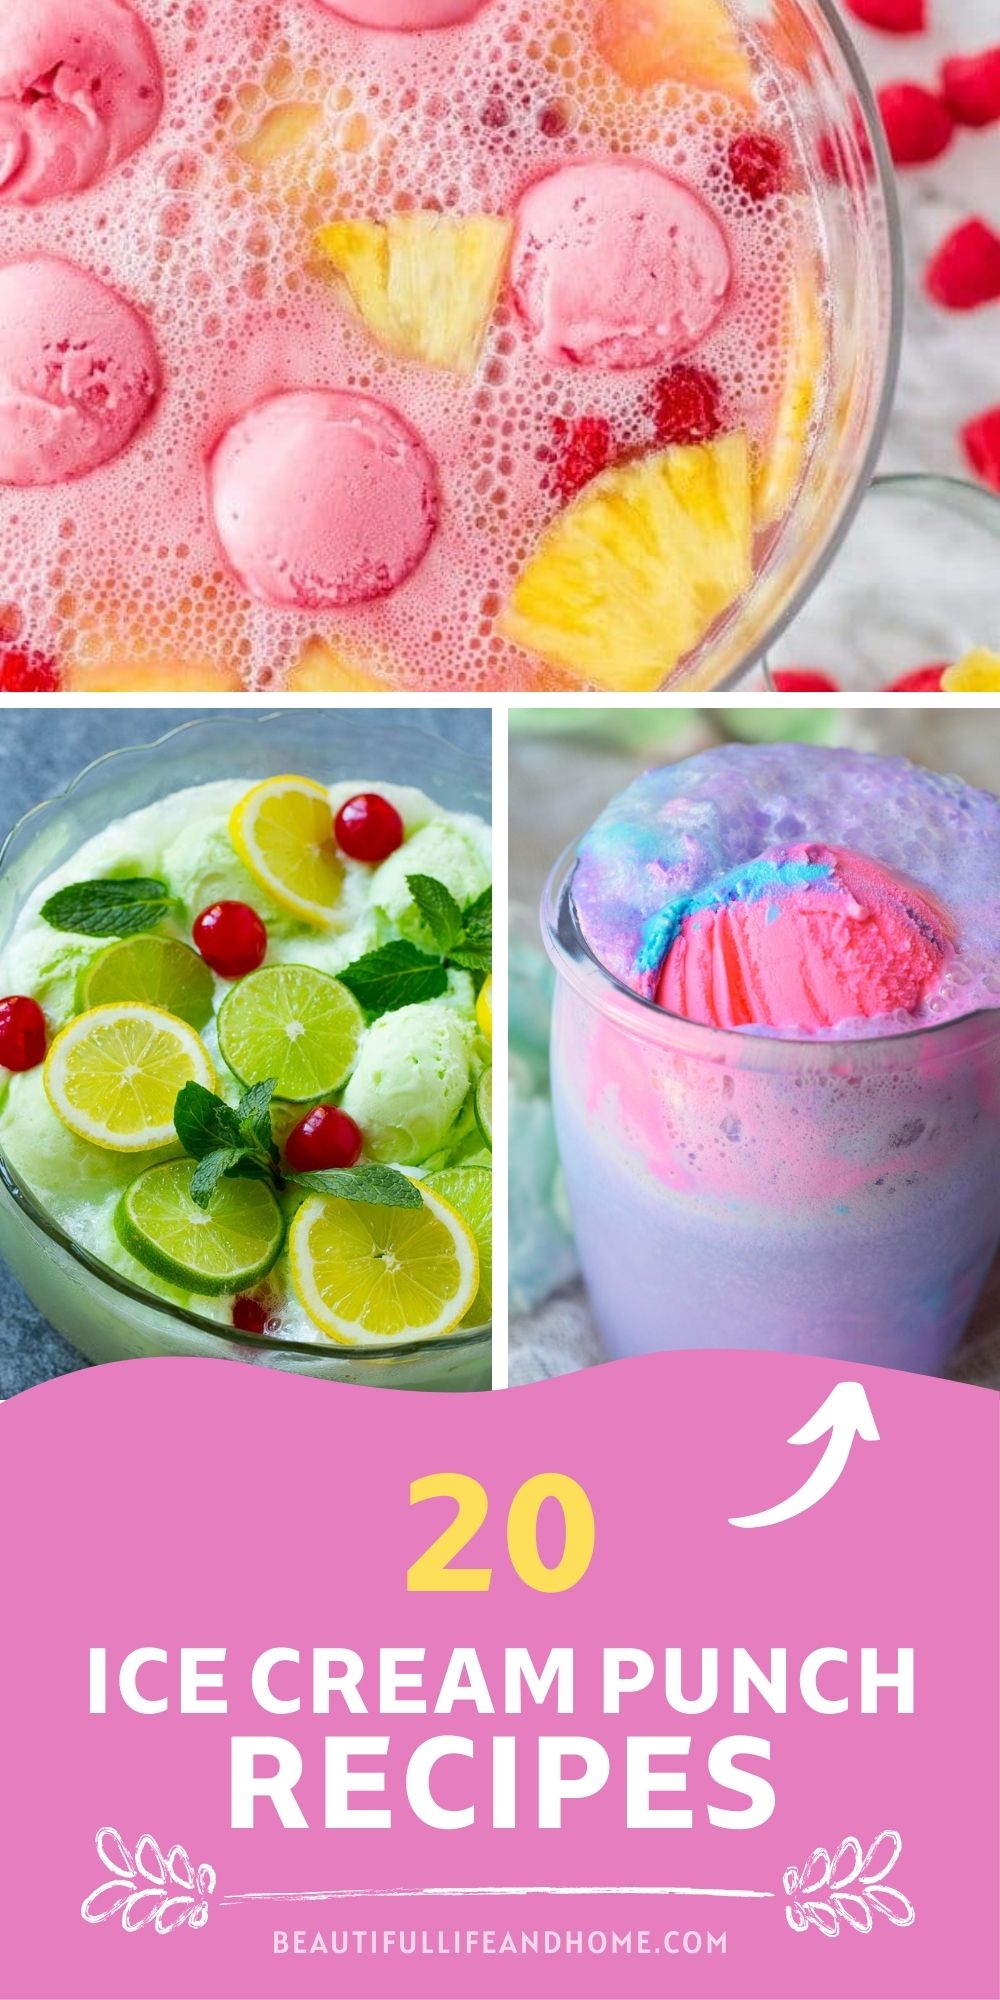 https://icecreaminspiration.com/wp-content/uploads/2019/04/20-Ice-Cream-Punch-Recipes.jpg